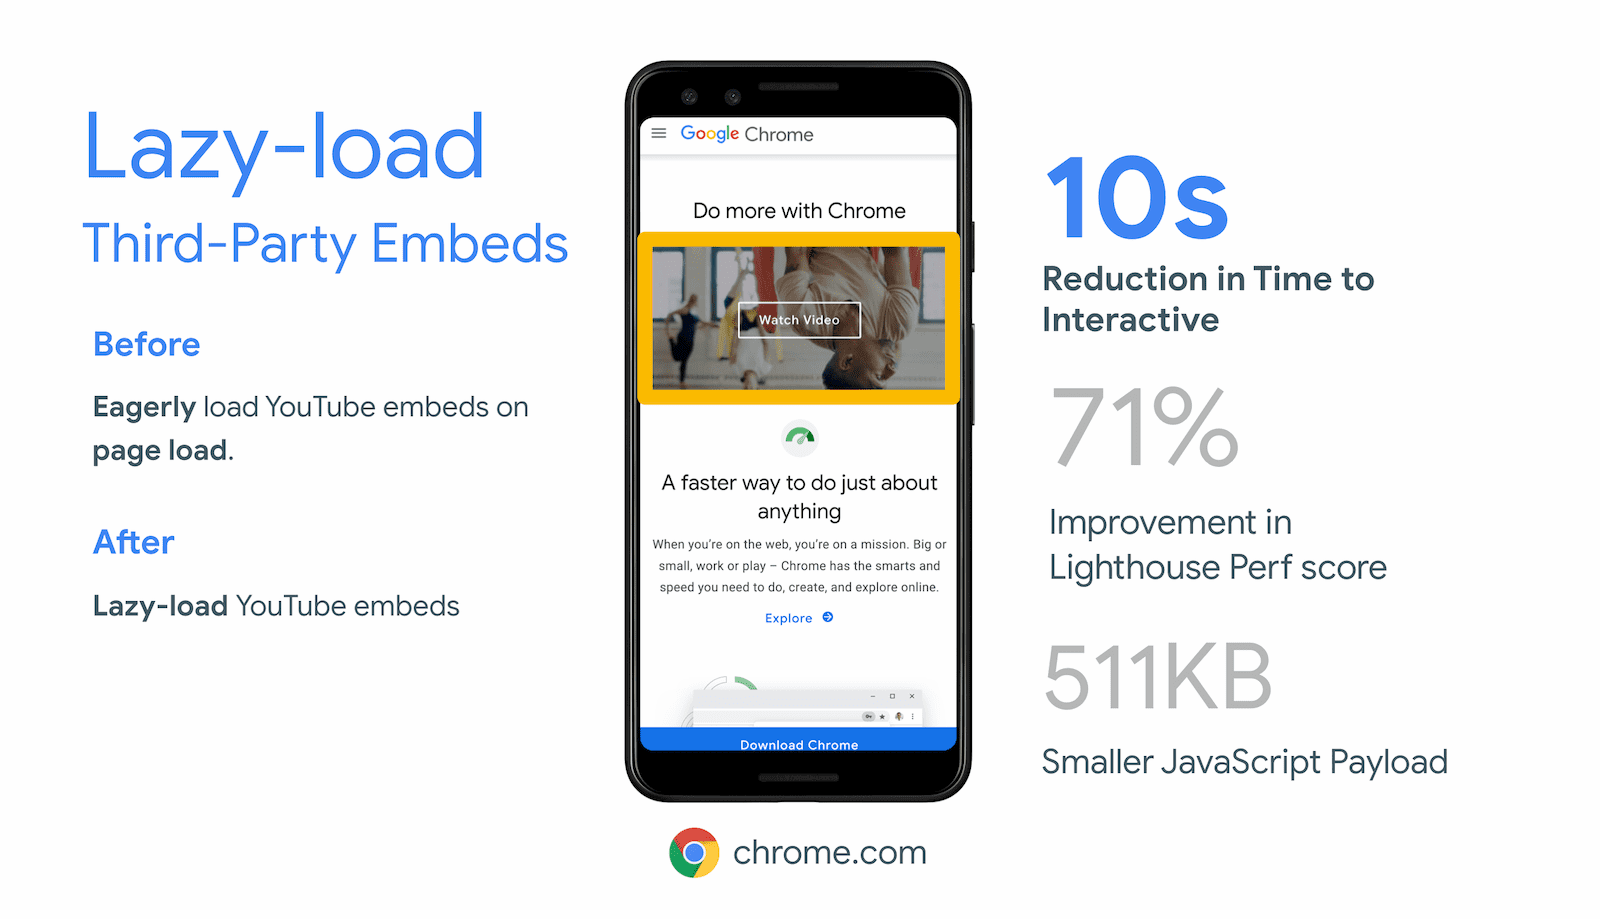 Chrome.com ลดเวลาในการโต้ตอบลงได้ 10 วินาทีเนื่องจากการโหลด iframe นอกหน้าจอแบบ Lazy Loading สำหรับการฝังวิดีโอ YouTube